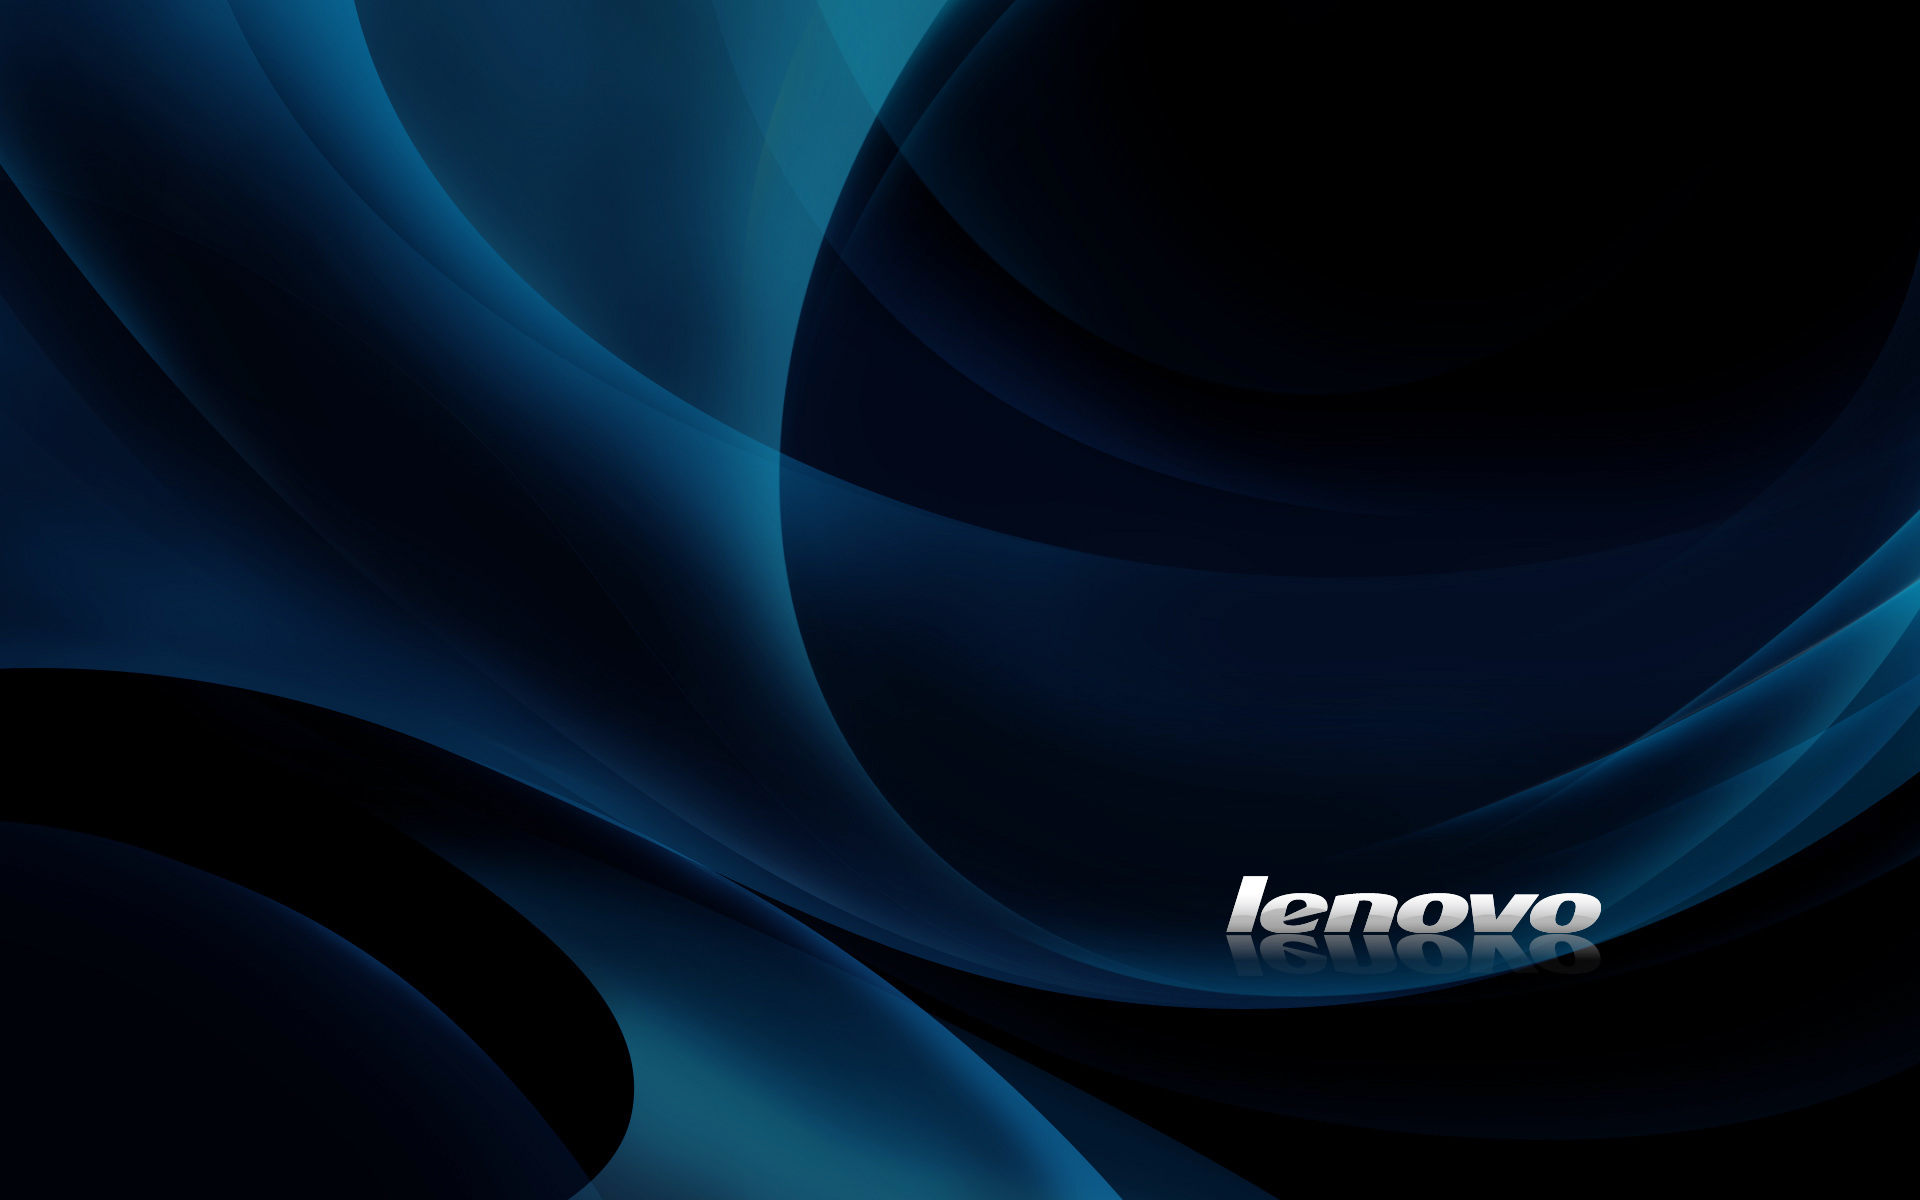 Lenovo Desktop Theme And Wallpaper For Windows